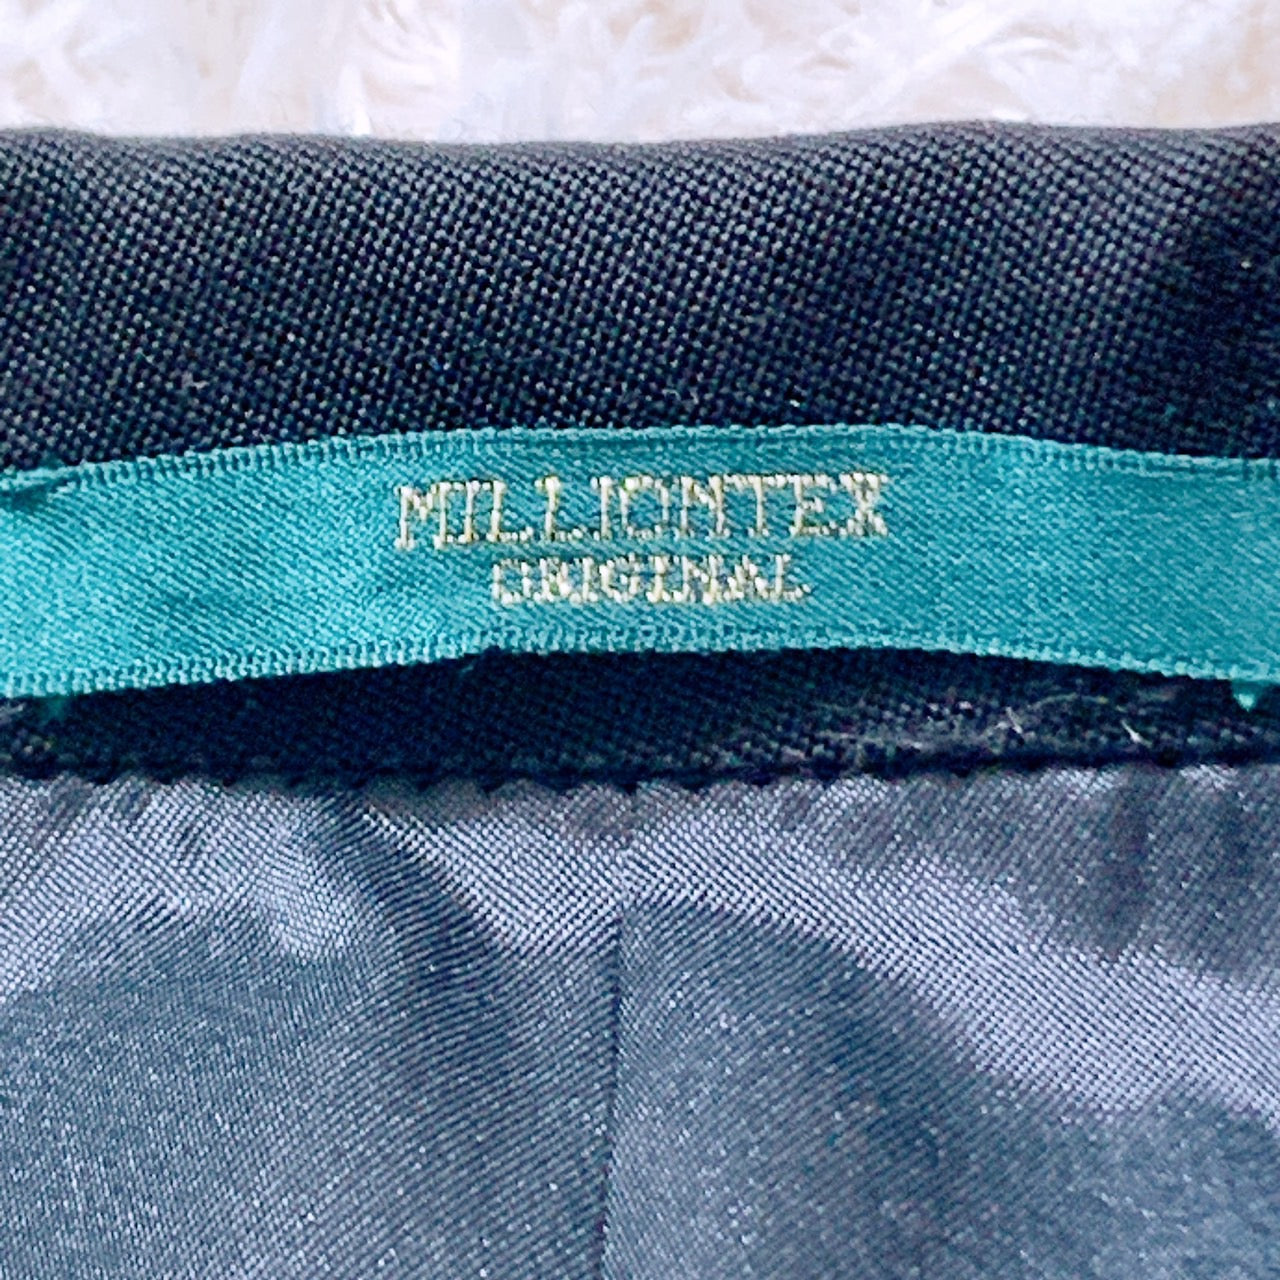 【26886】 MILLIONTEX ミリオンテックス スーツ サイズAB6 / 約XL(LL) ブラック フォーマル 冠婚葬祭 ウエストアジャスター付き メンズ